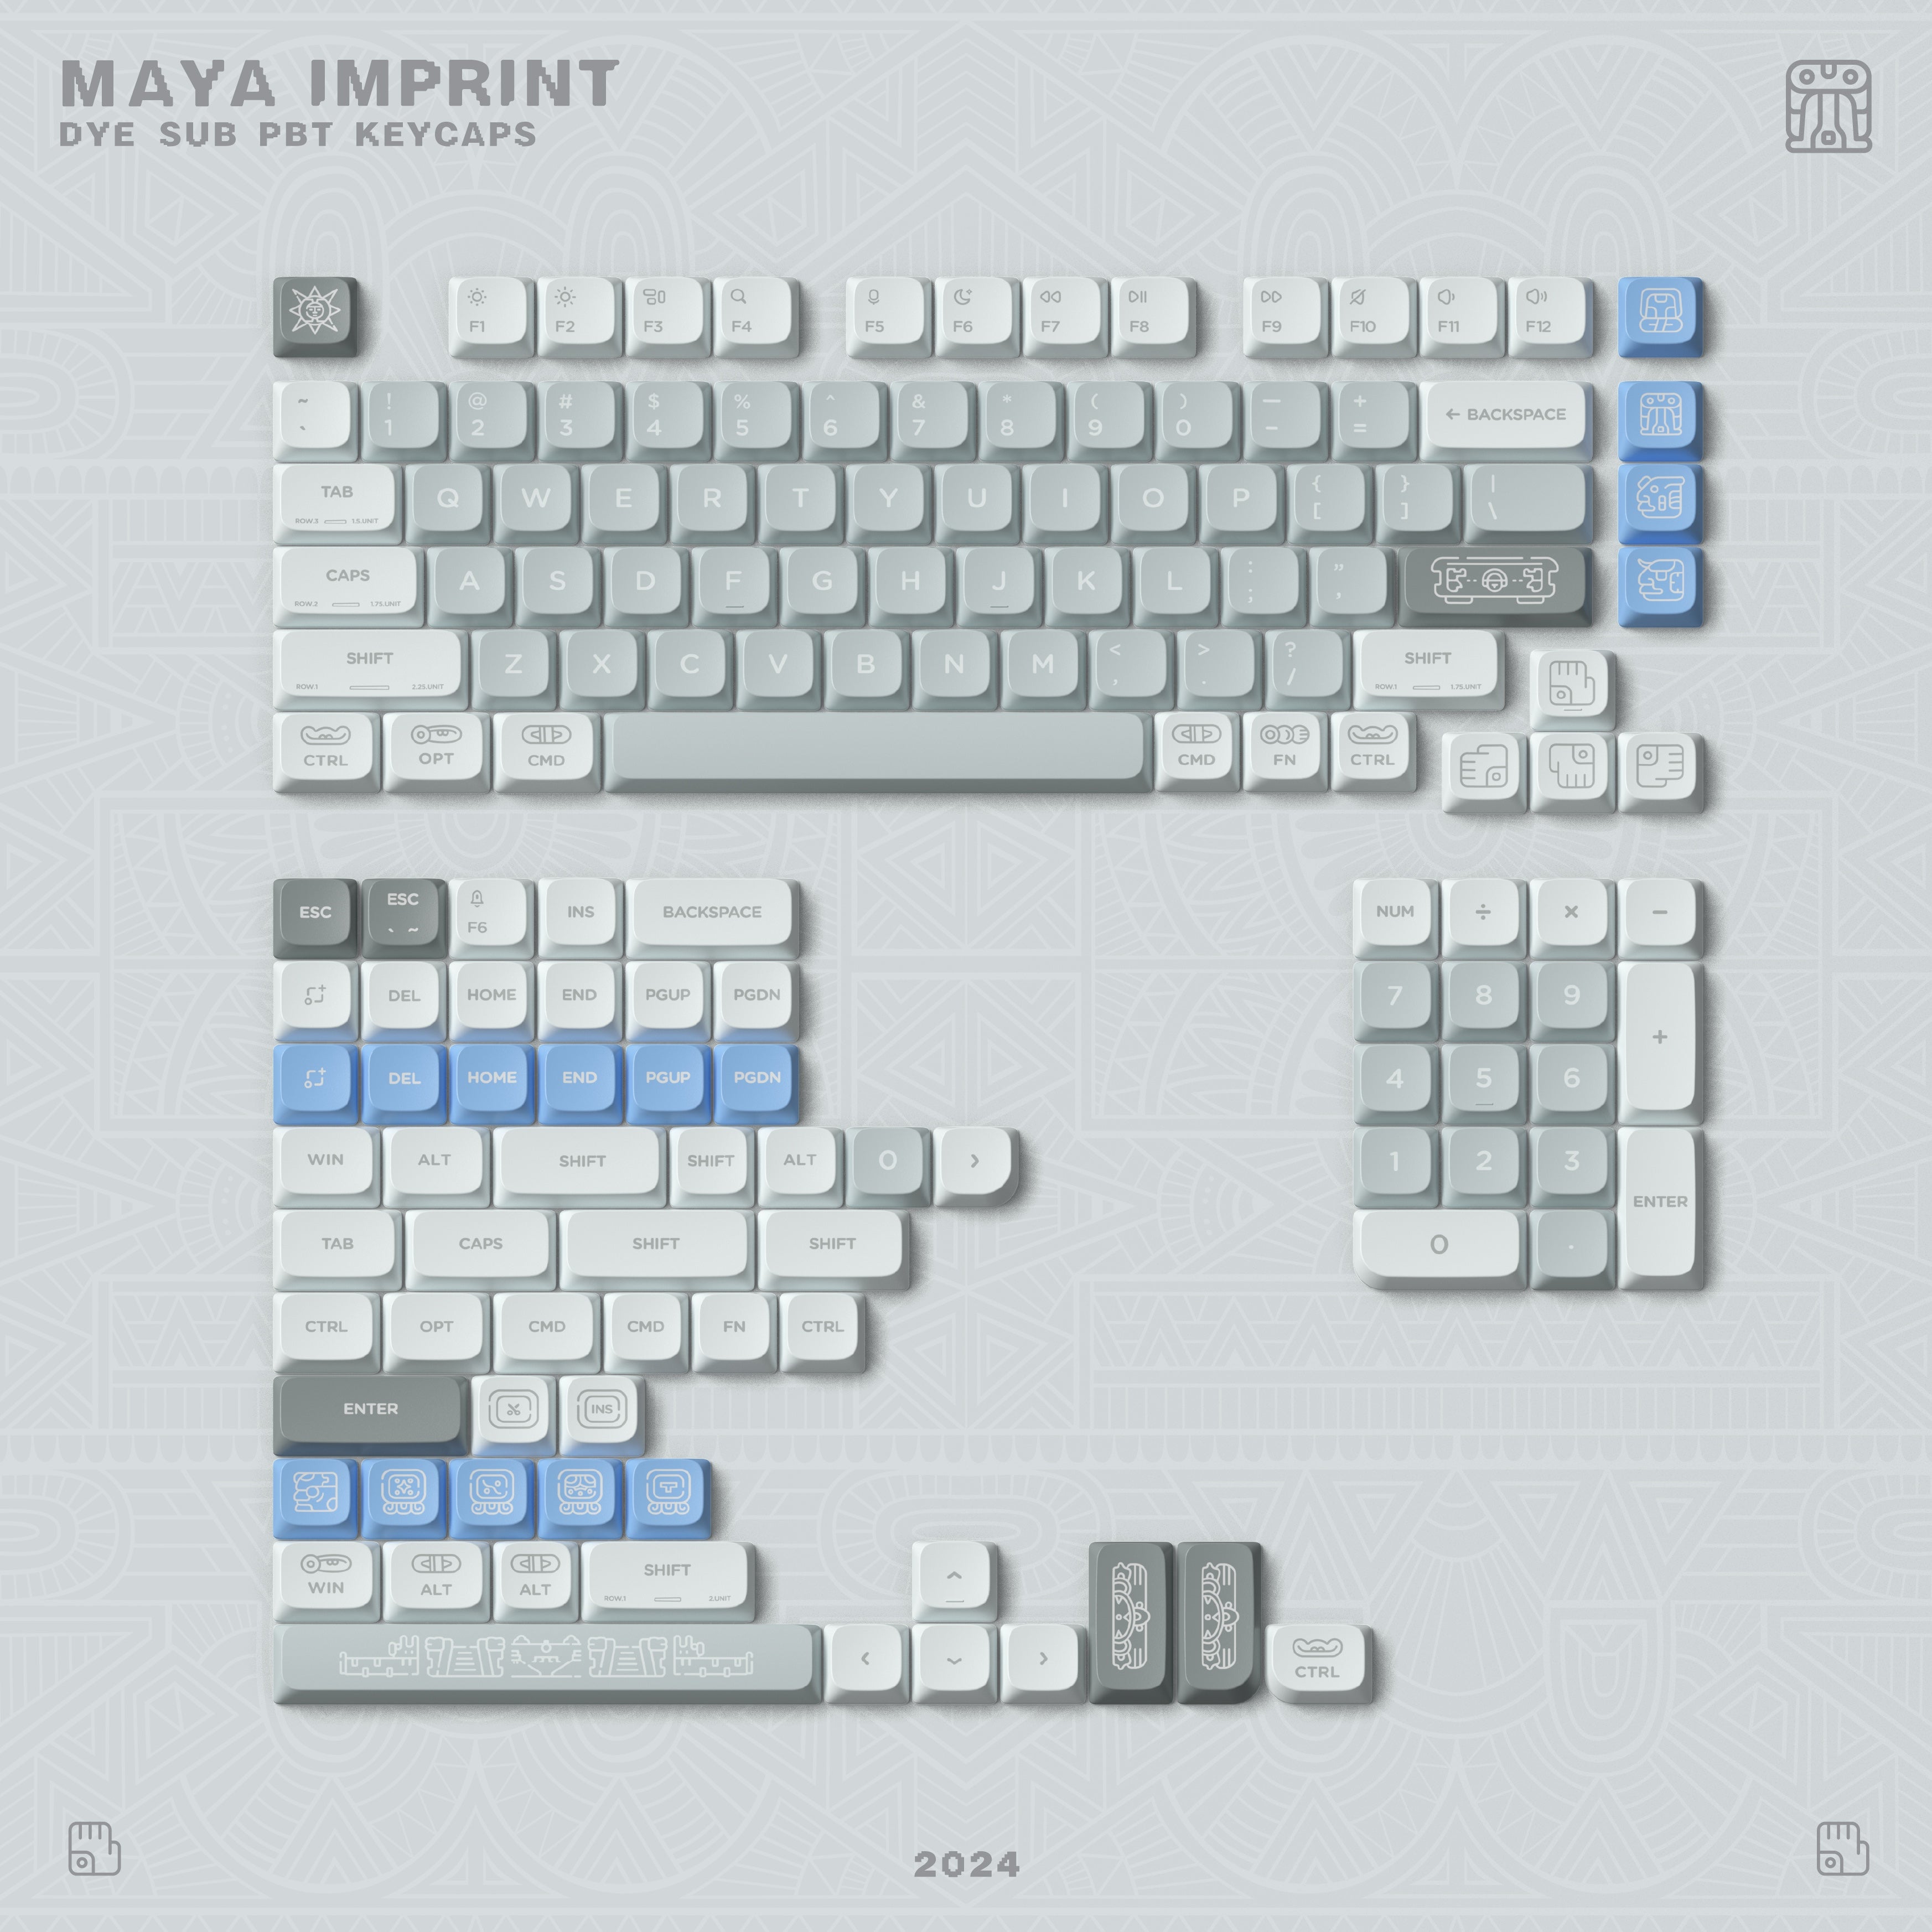 NuPhy - Maya Imprint nSA Dye-sub PBT Keycaps